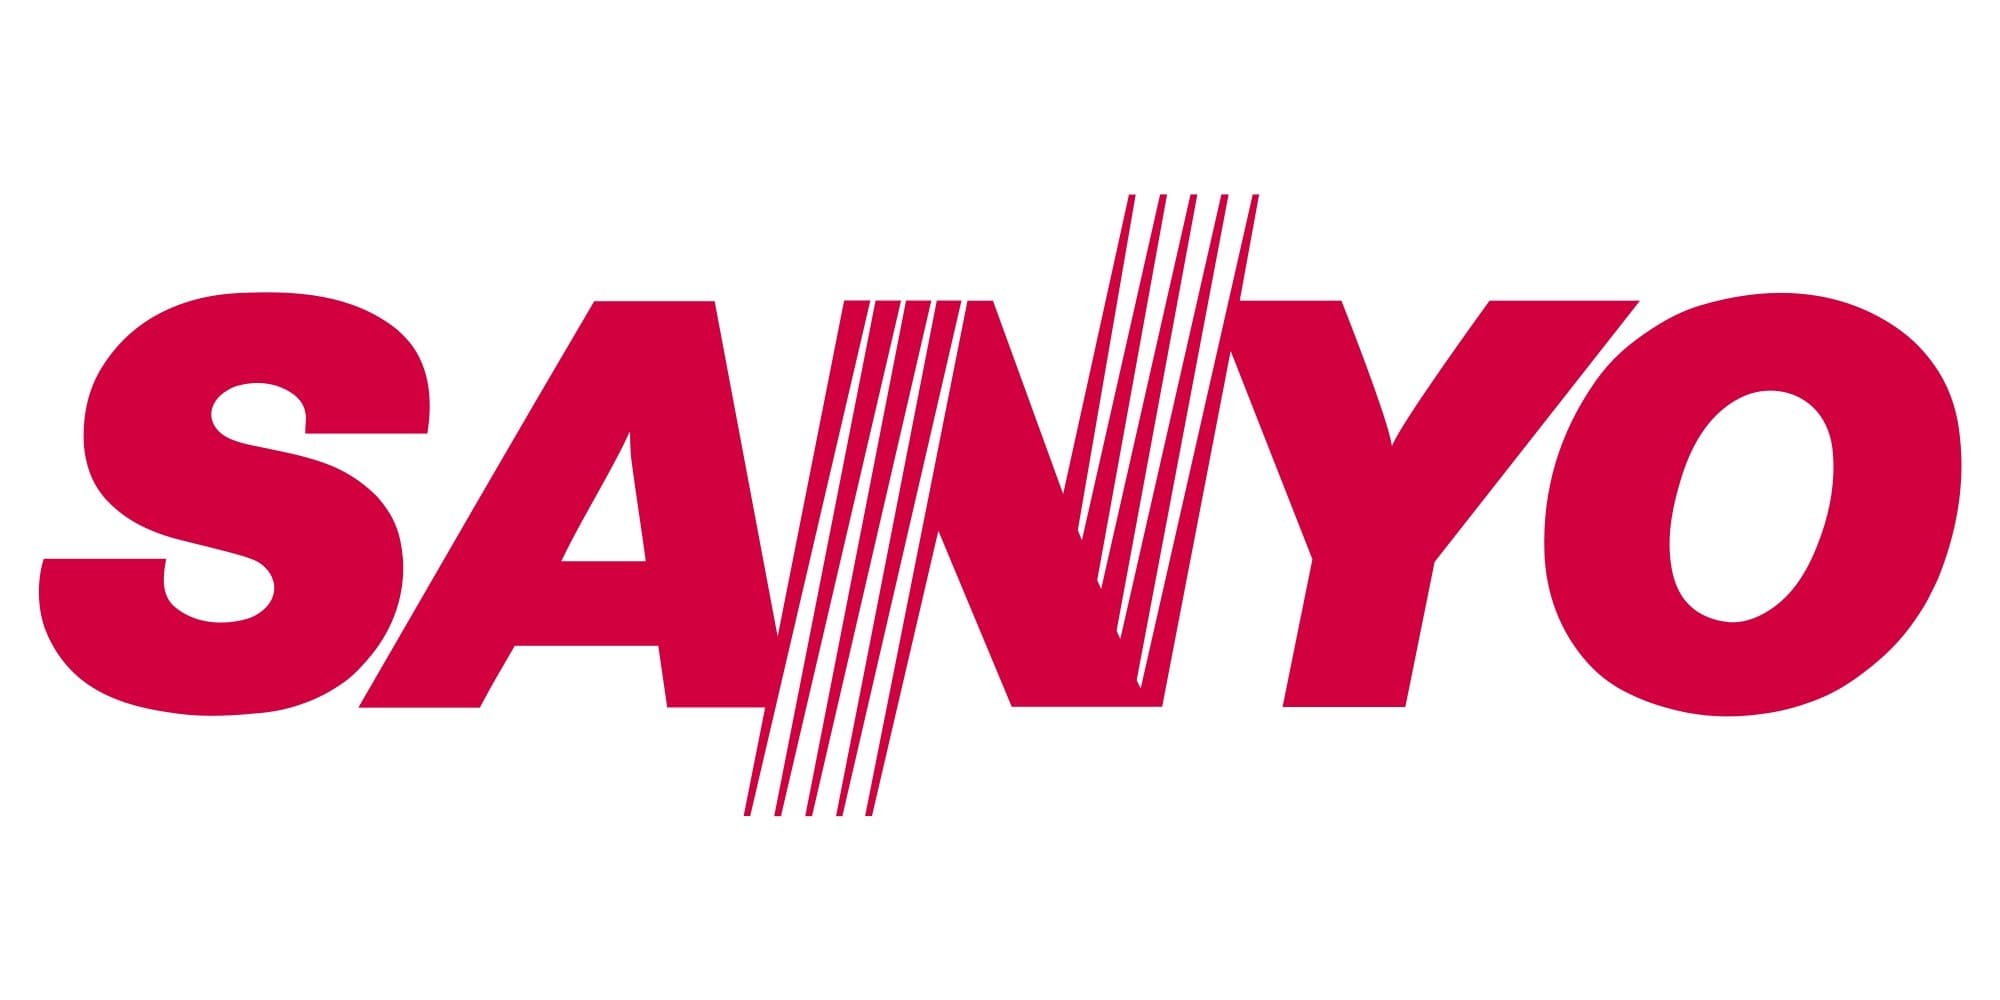 sanyo ceramic logo